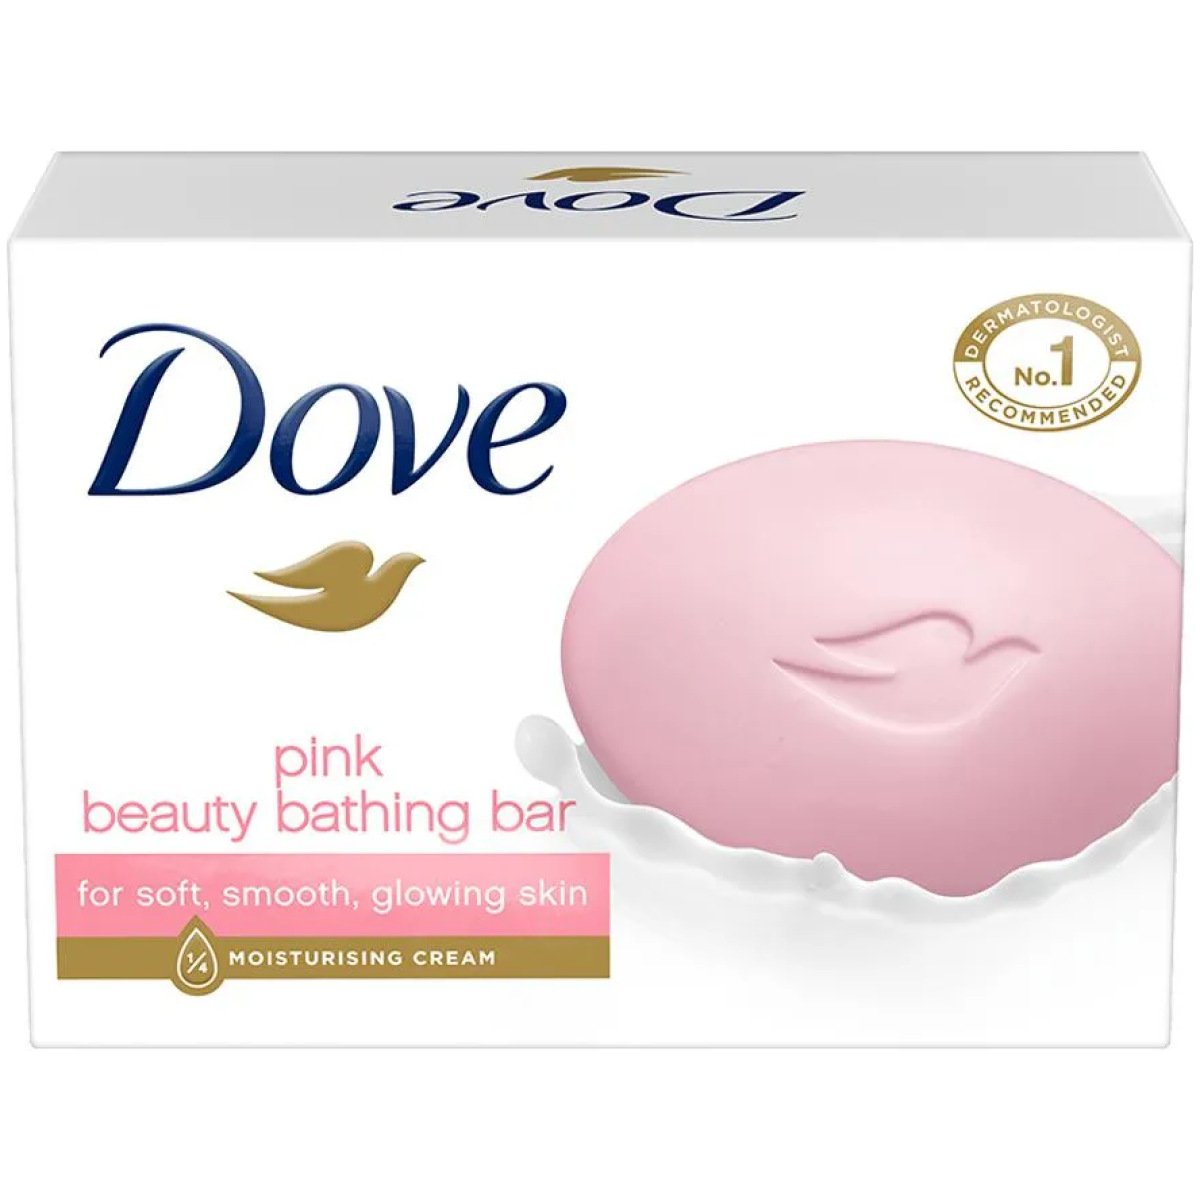 Dove Pink Rosa Beauty Bathing Bar, Has 1/4th Moisturizing Cream 100 g